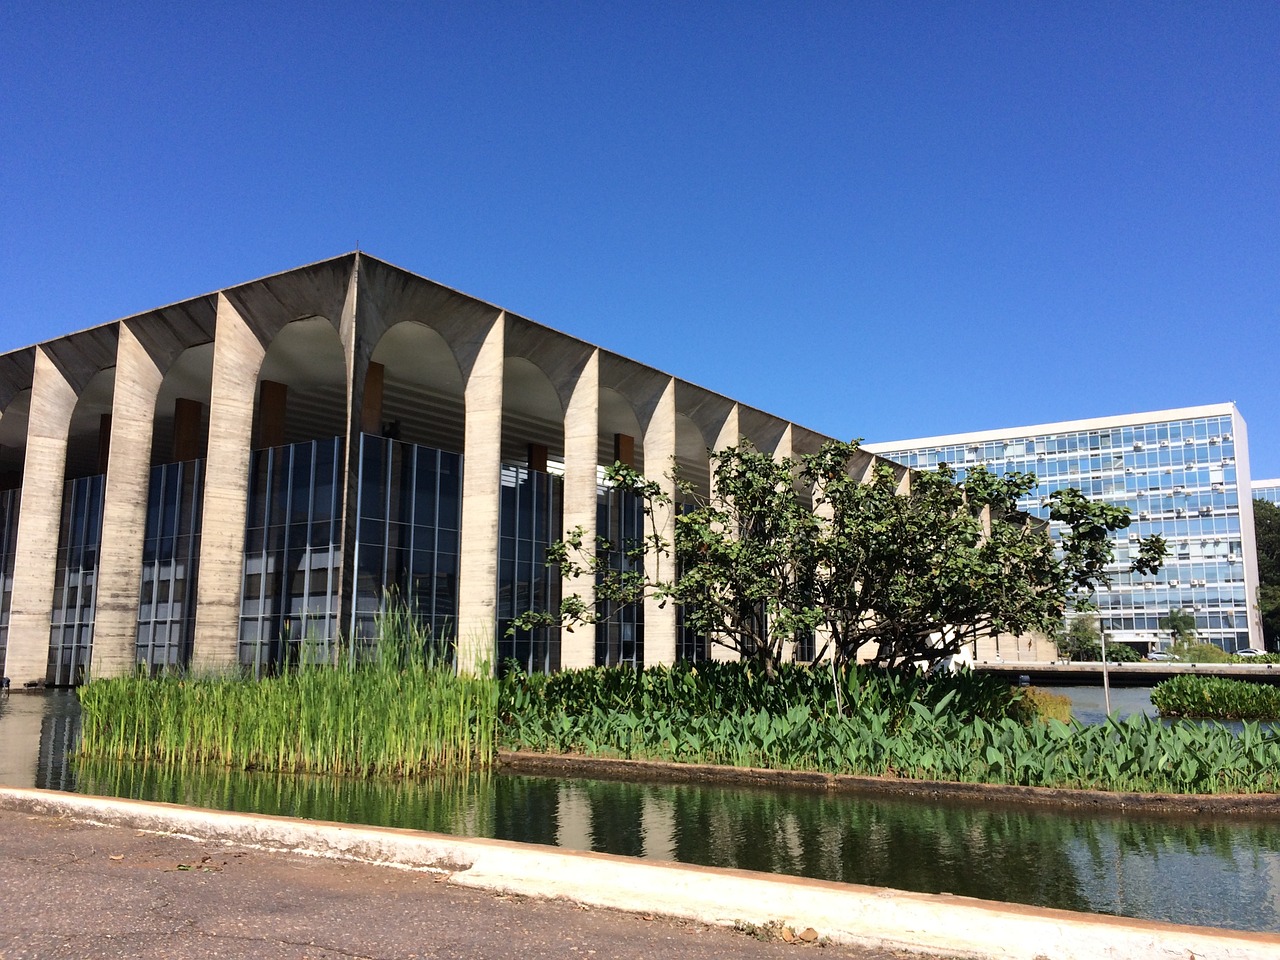 Discovering Brasília in 29 Days